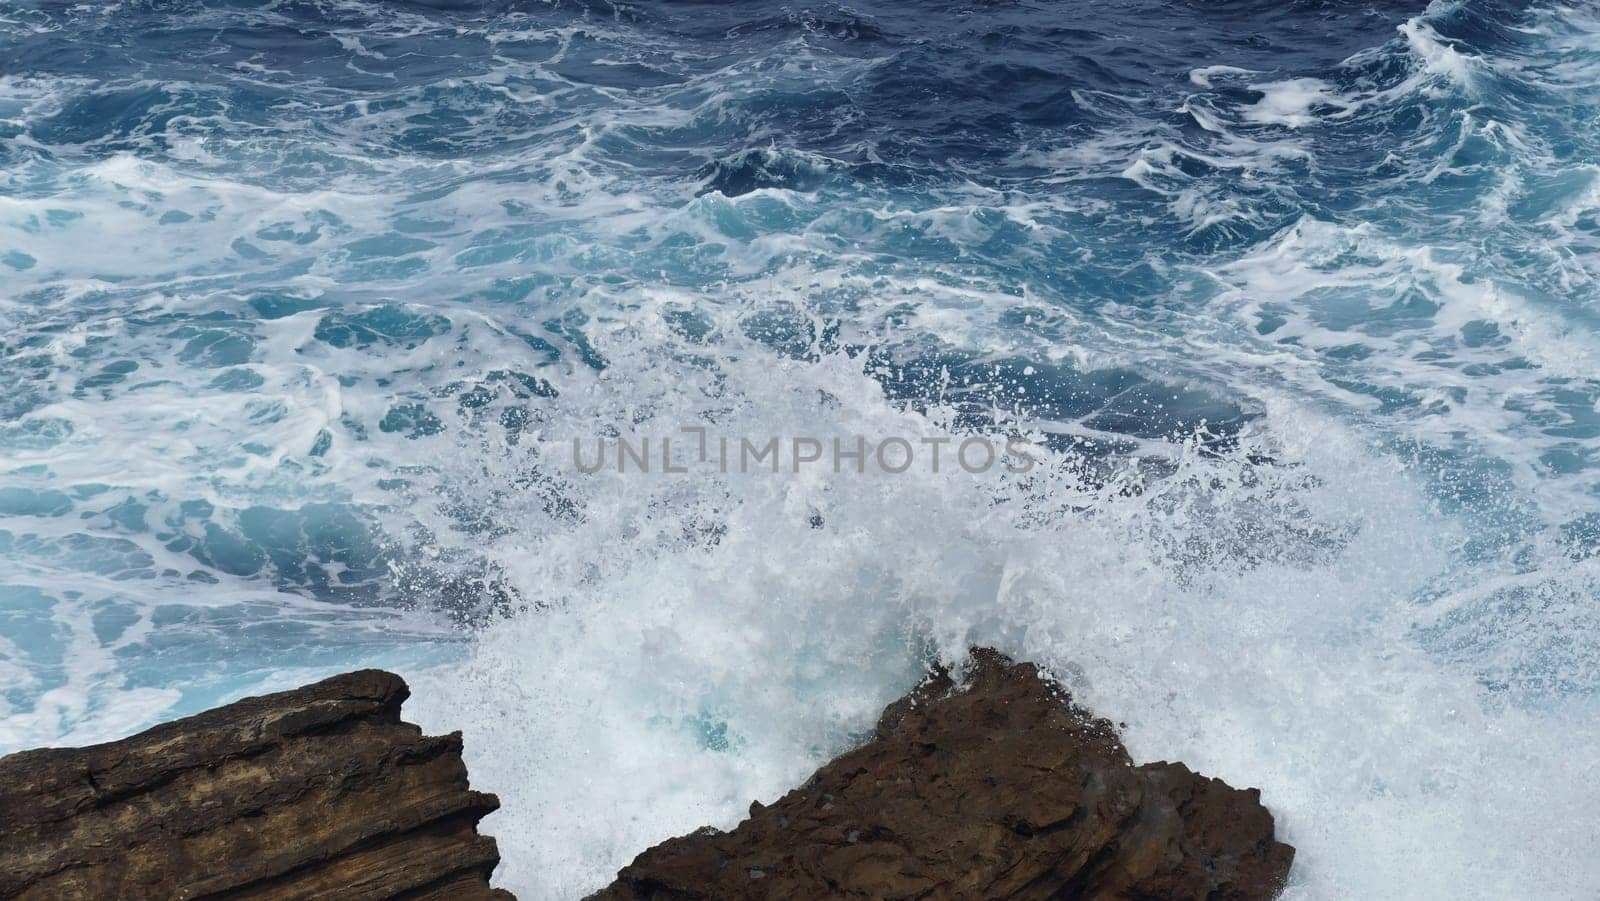 Coast of the sea with waves crashing on the rocks by XabiDonostia